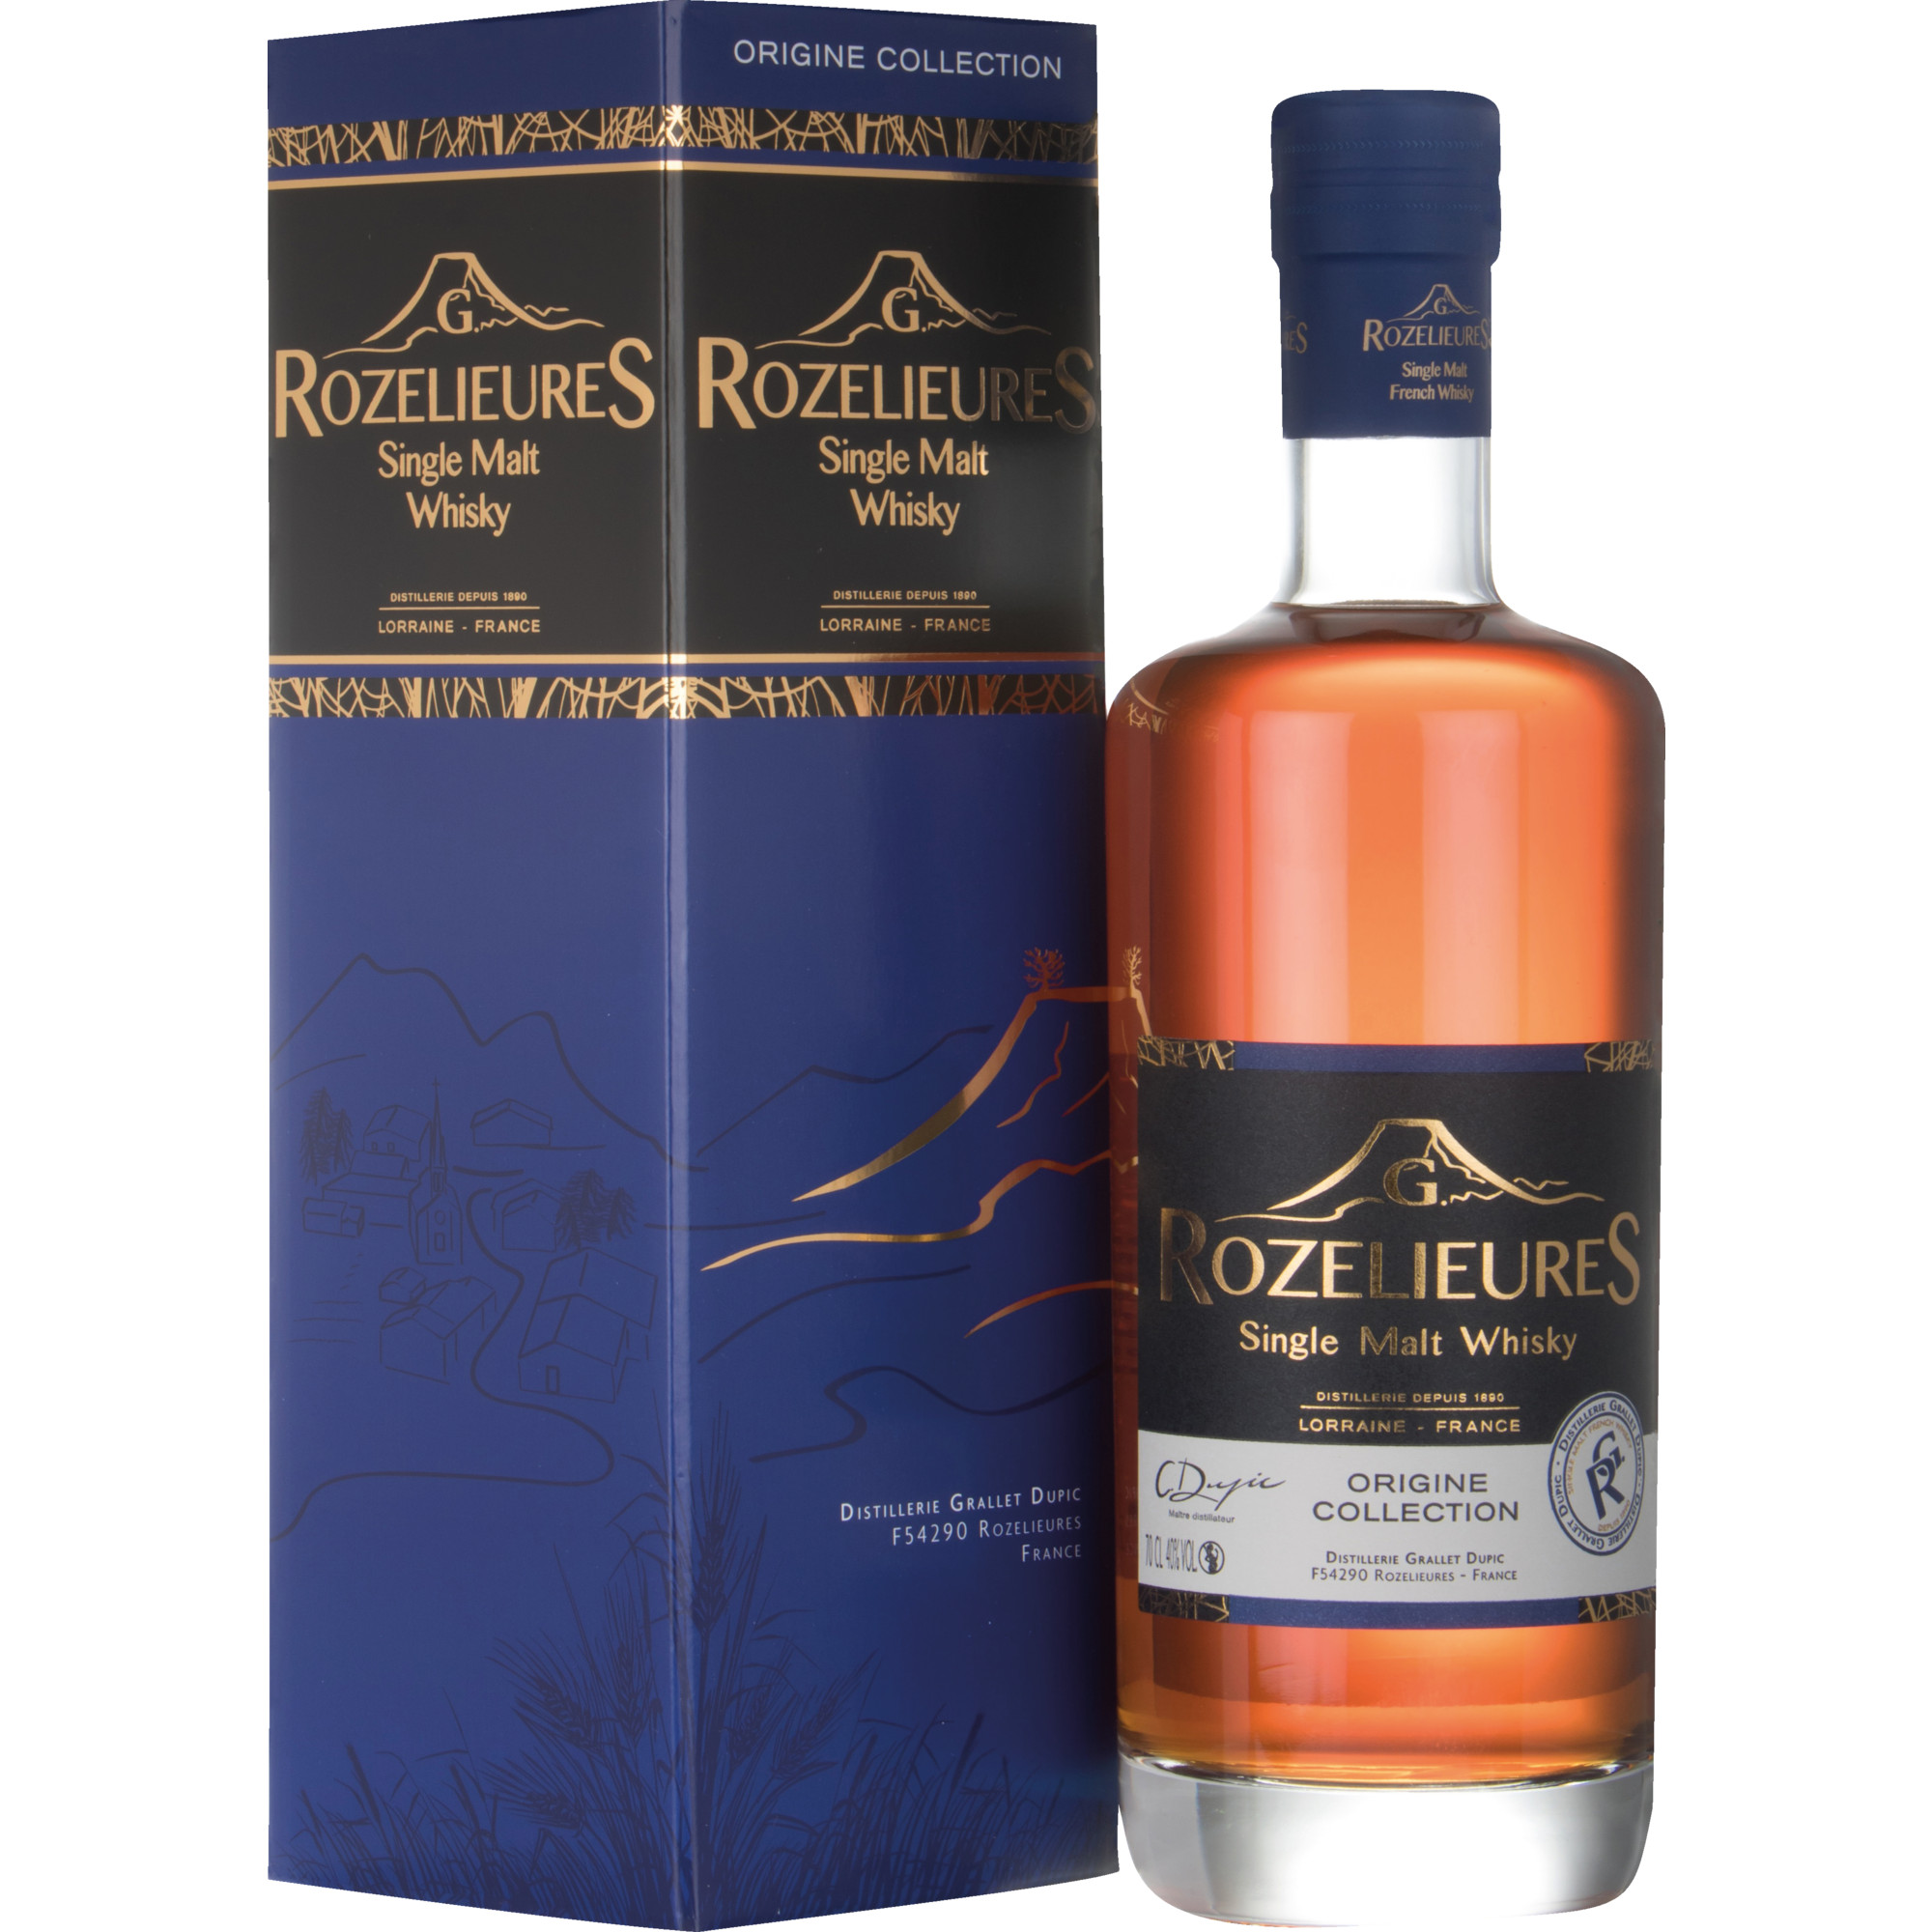 G. Rozelieures Single Malt Whisky, Origine Collection, 0,7 L, 40% Vol., in Etui, Spirituosen  Spirituosen Hawesko